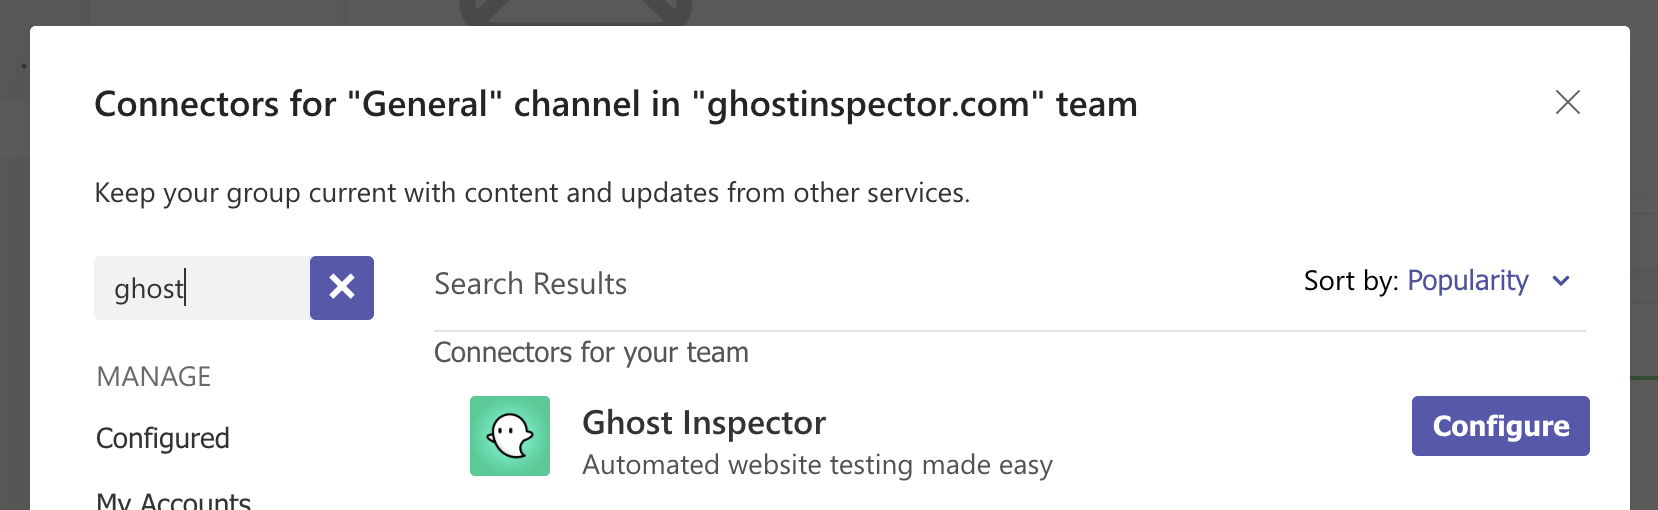 Microsoft Teams: Ghost Inspector Connector